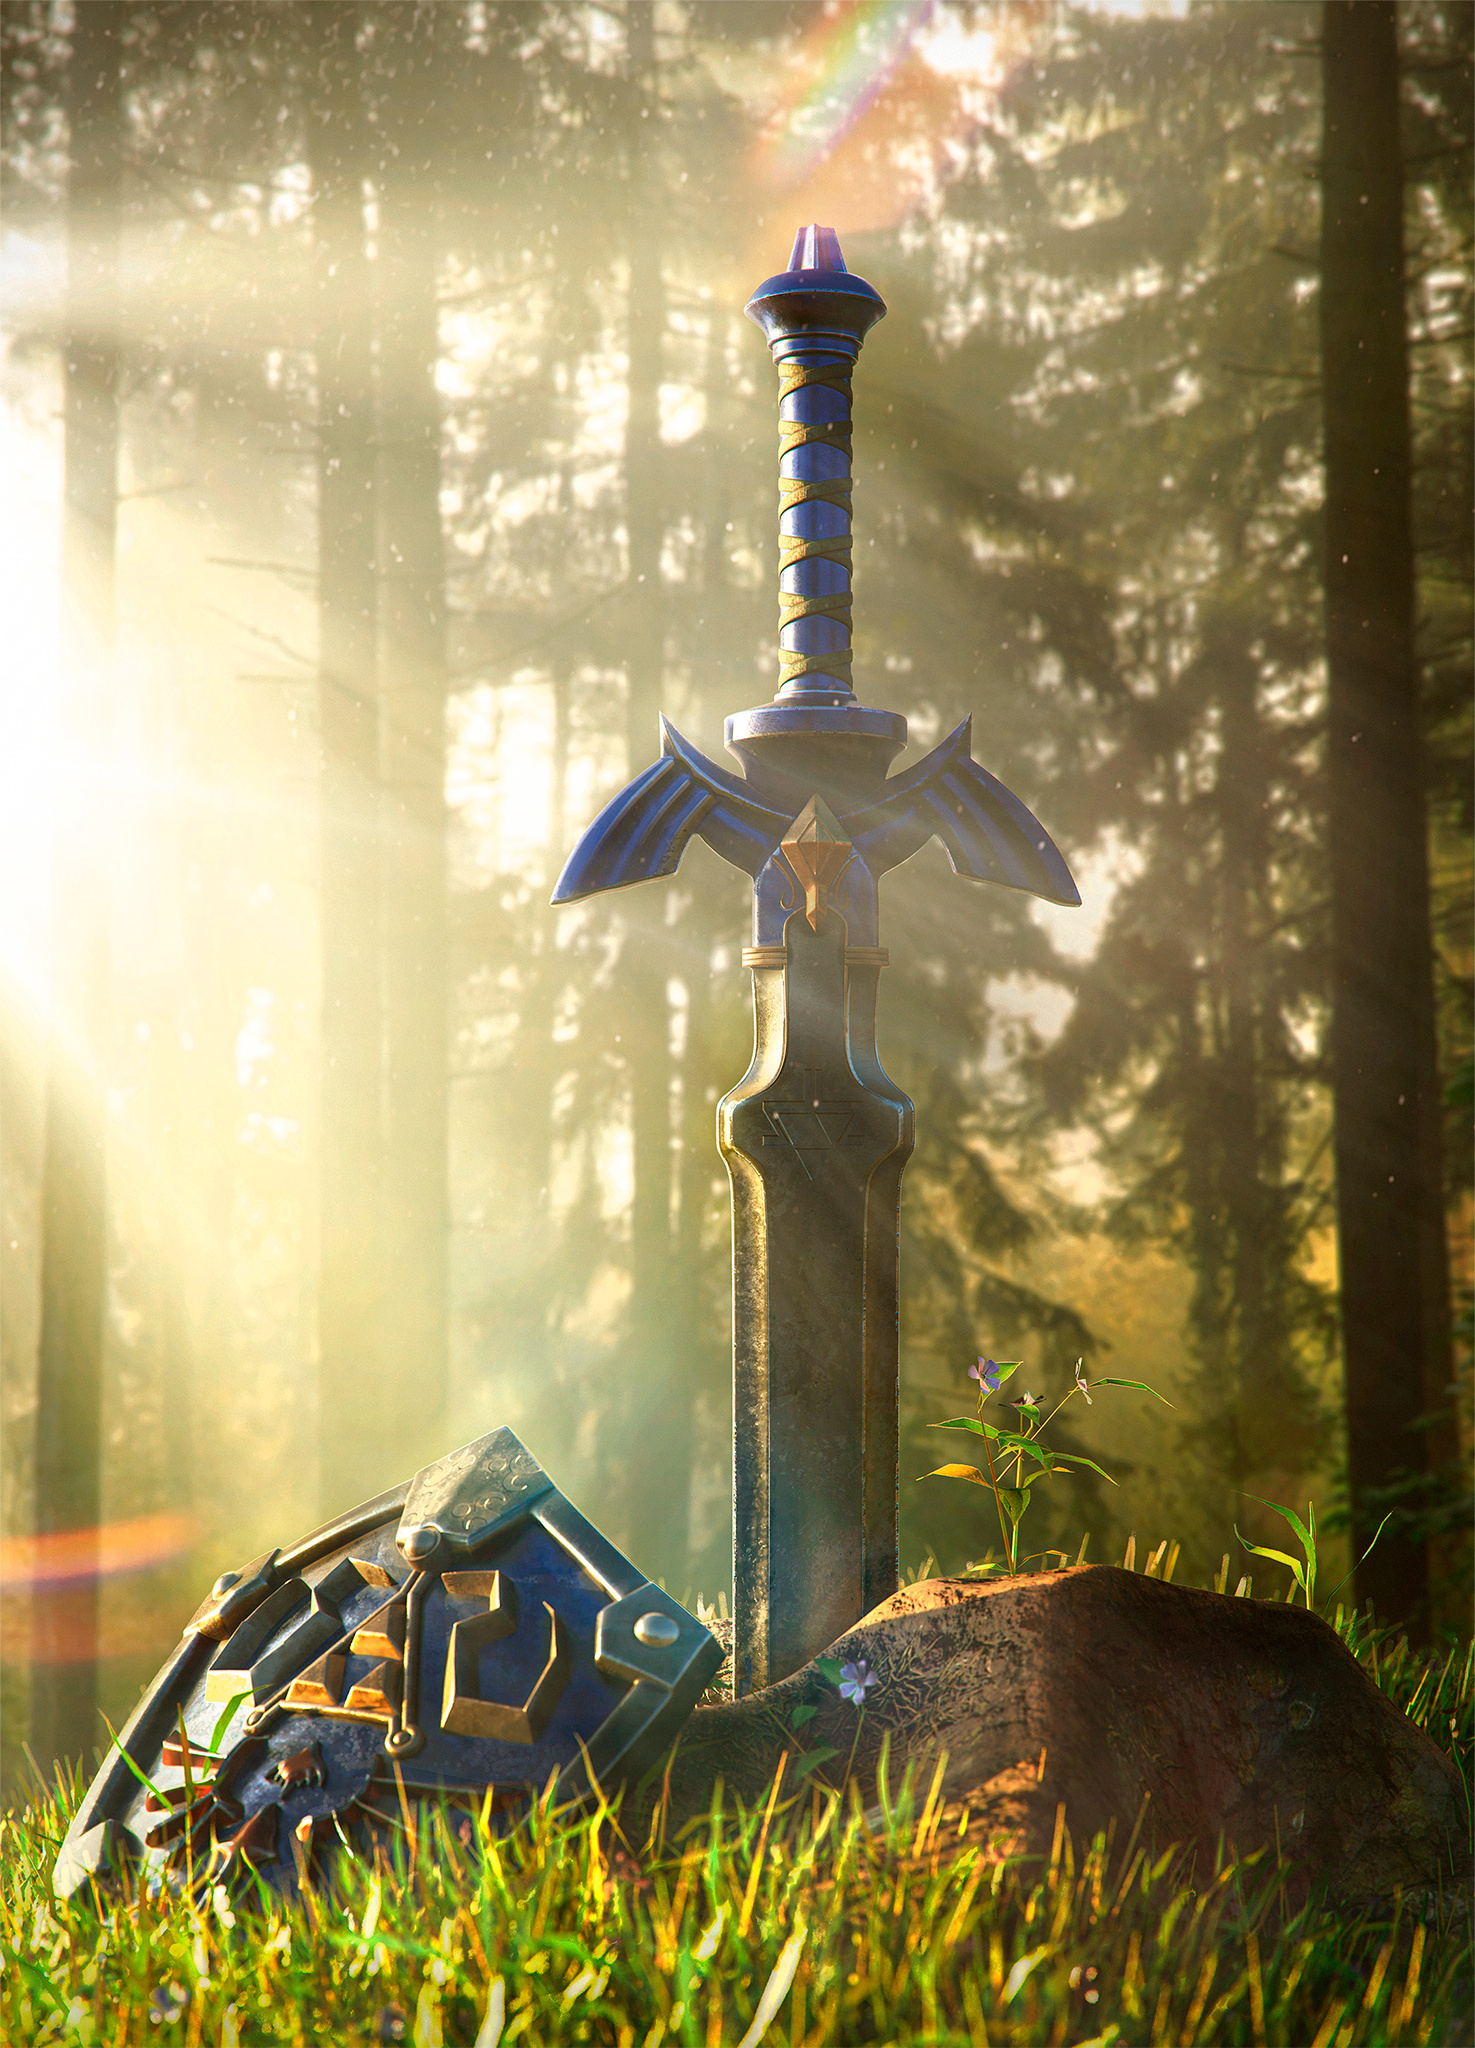 Master Sword Background